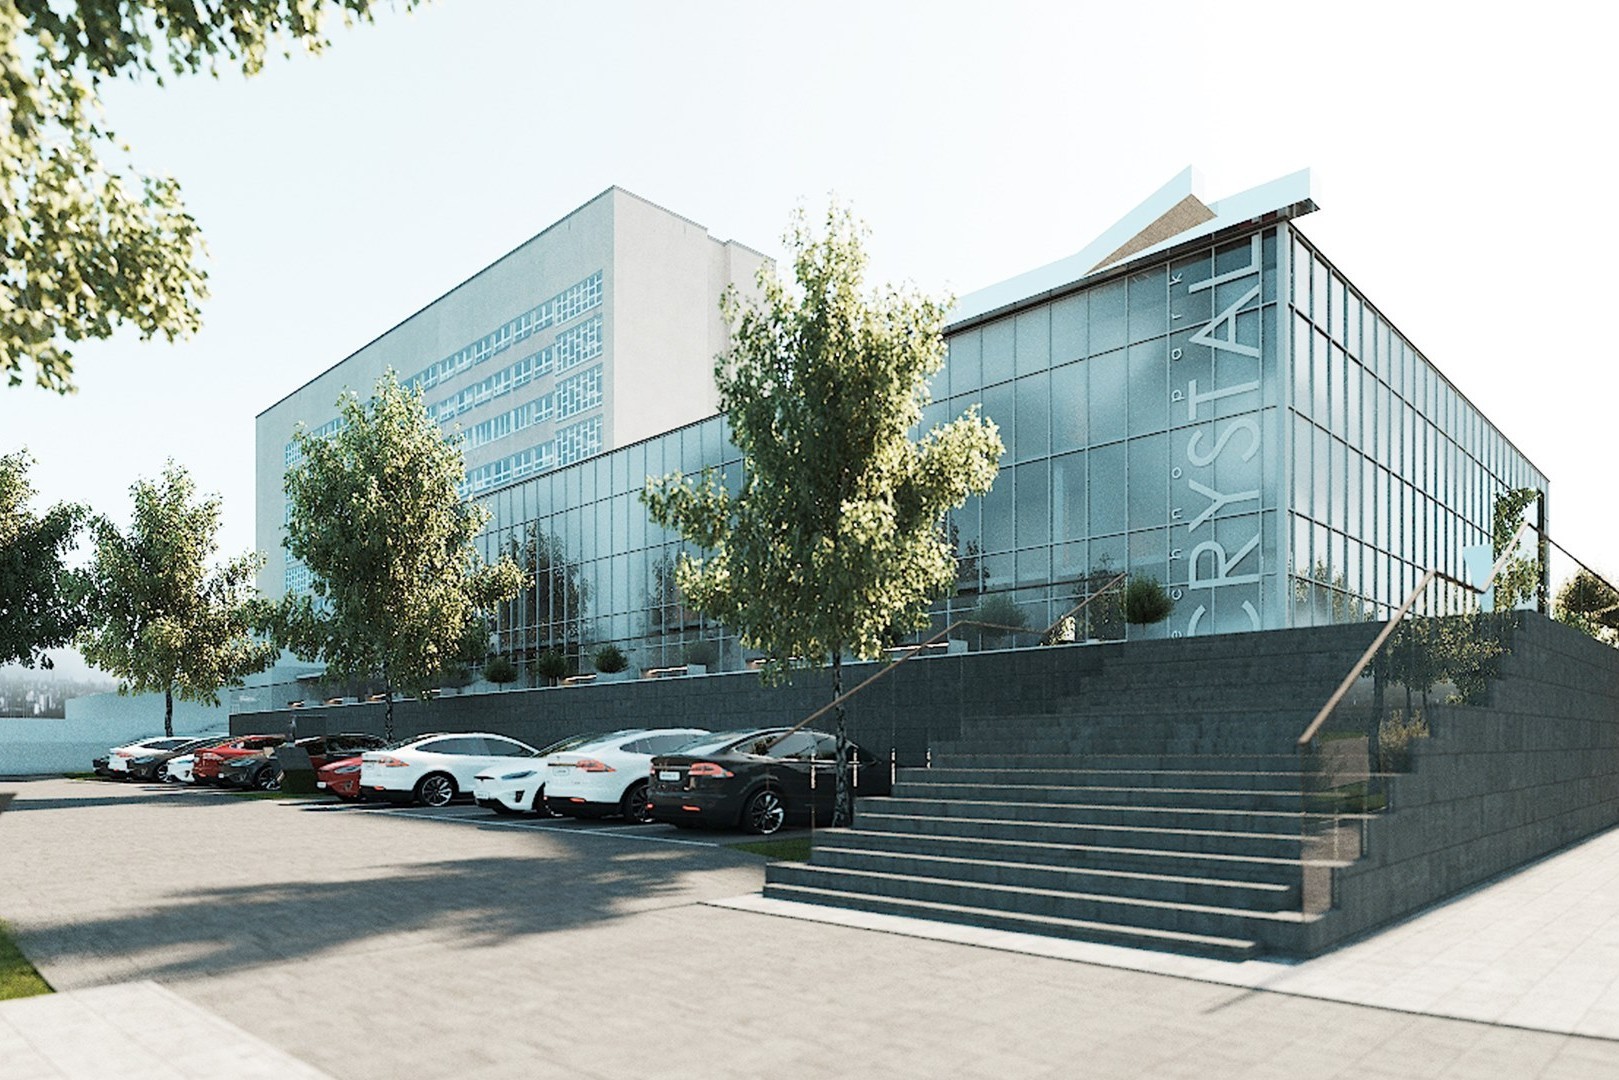 Vinnytsia approves Crystal Innovation and Technology Park Development Concept